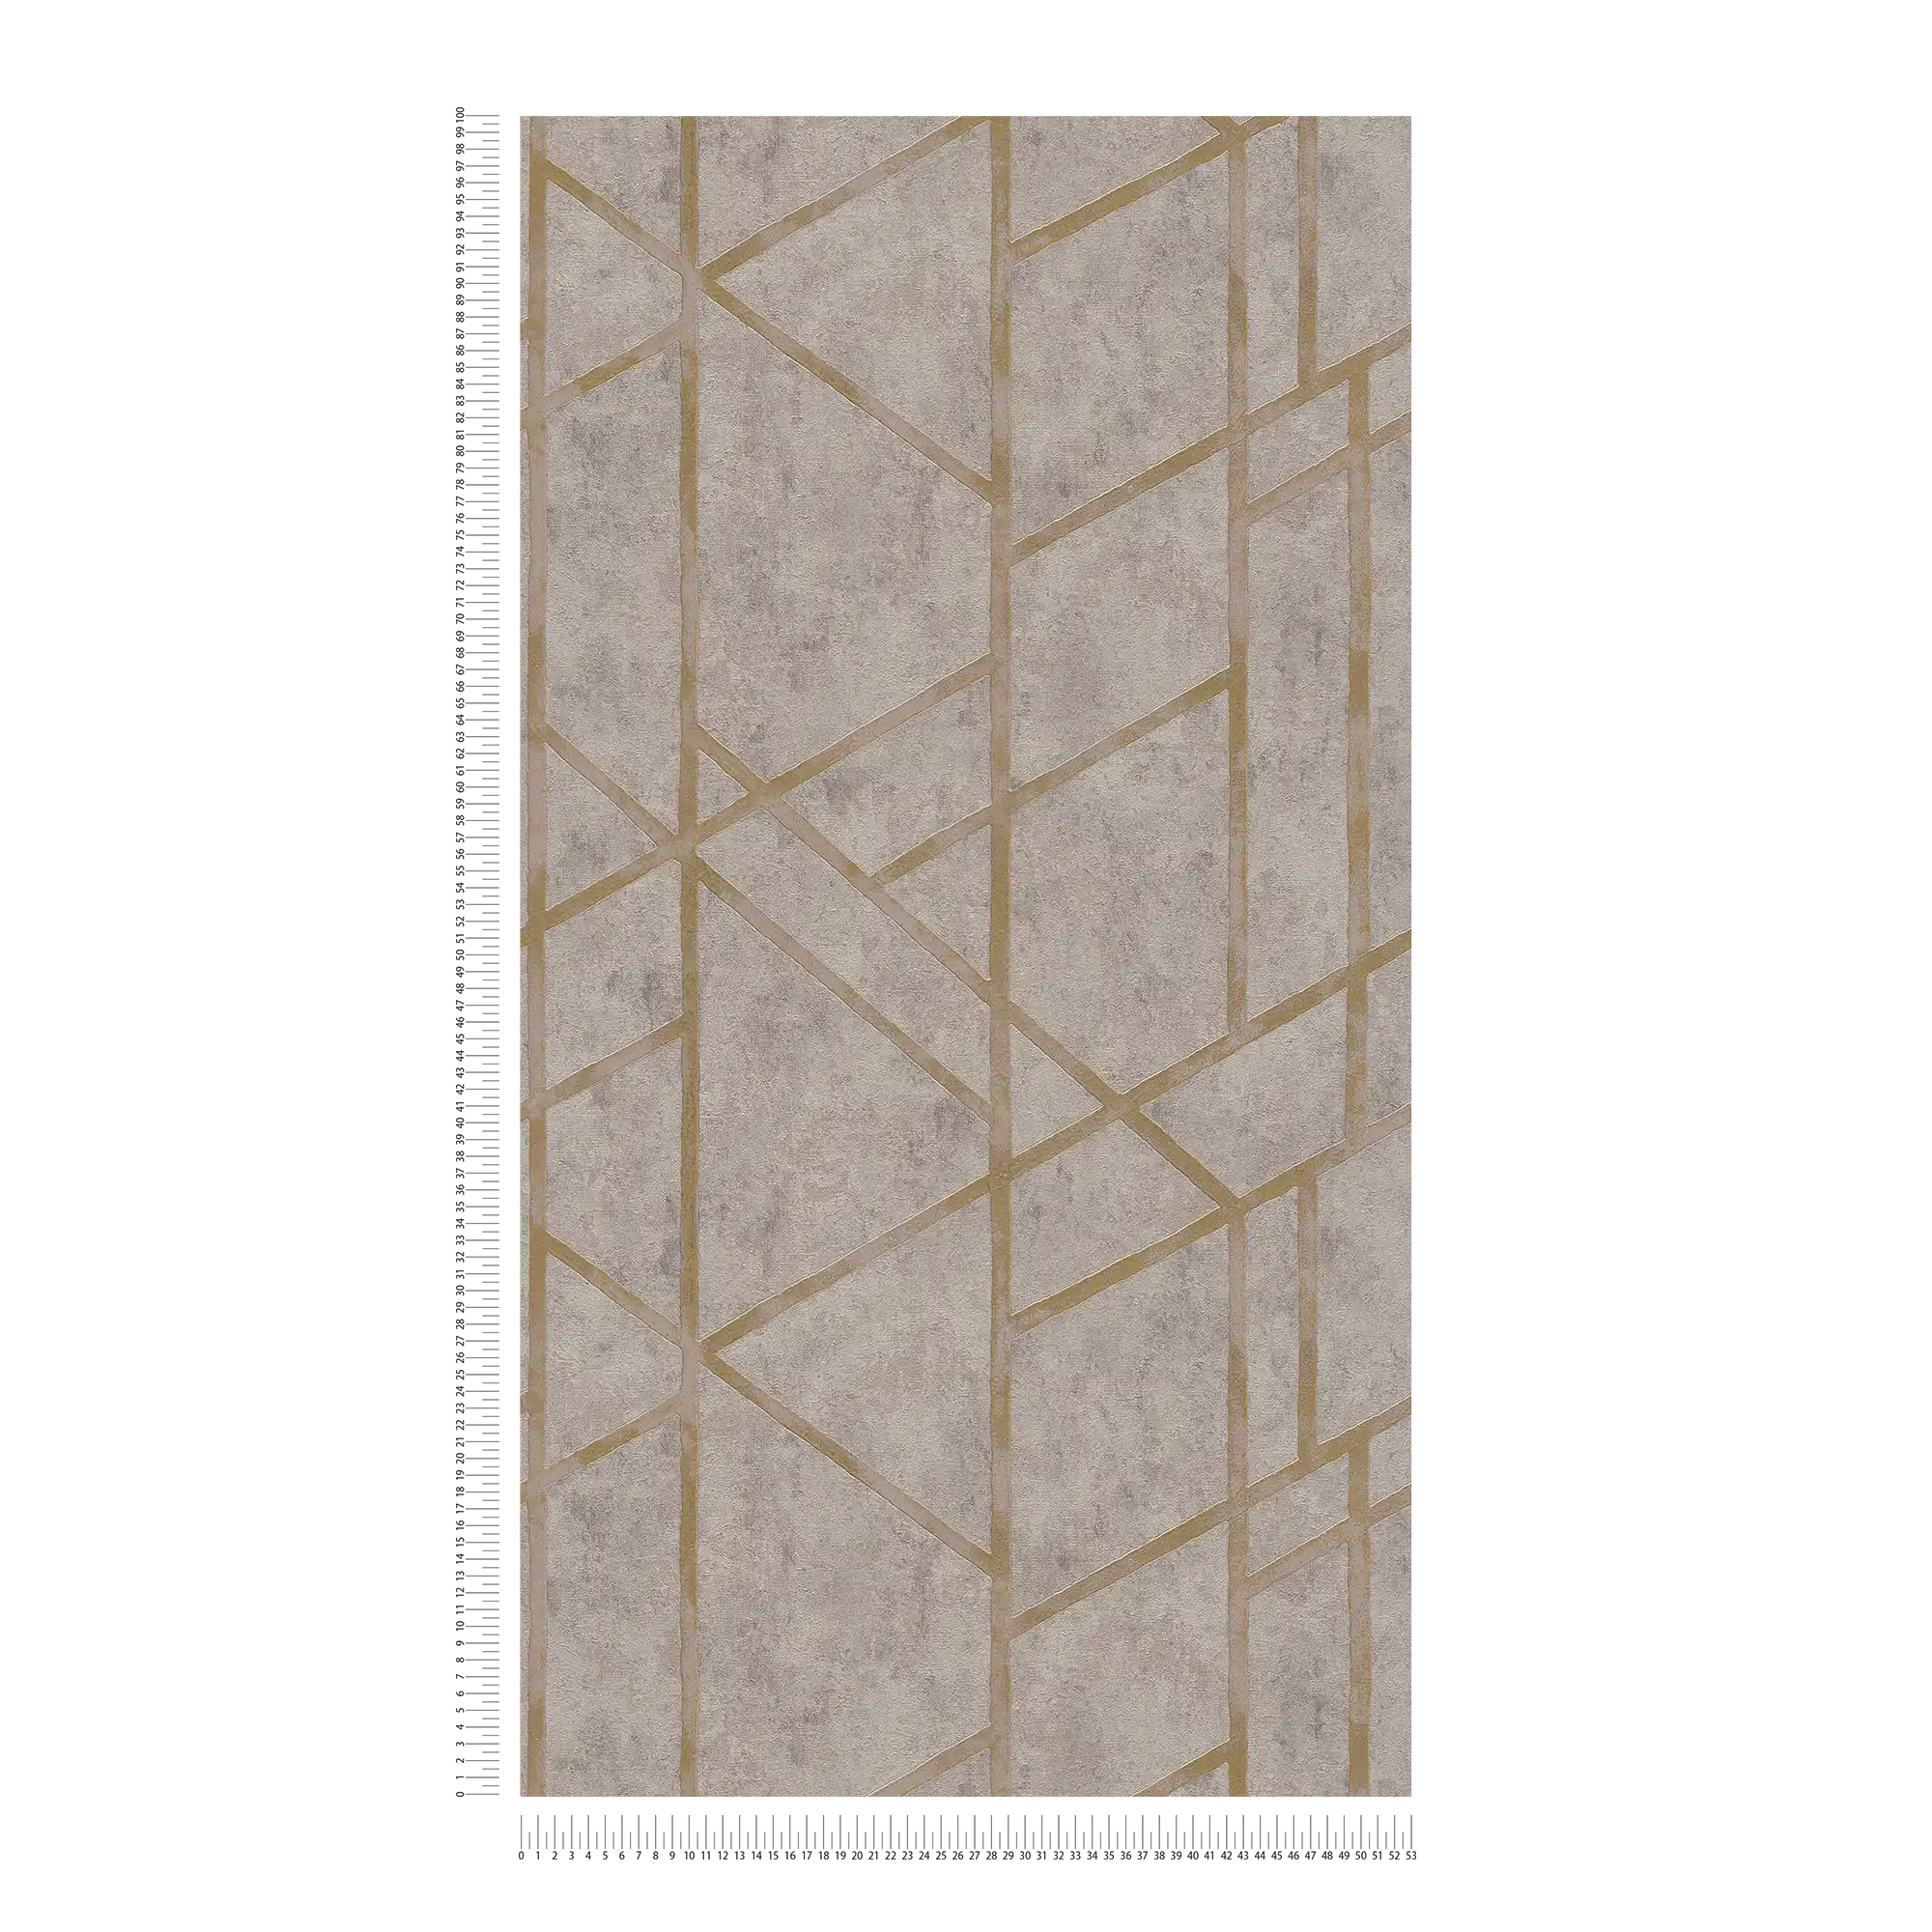             Betontapete mit goldenem Linien-Muster – Gold, Beige, Grau
        